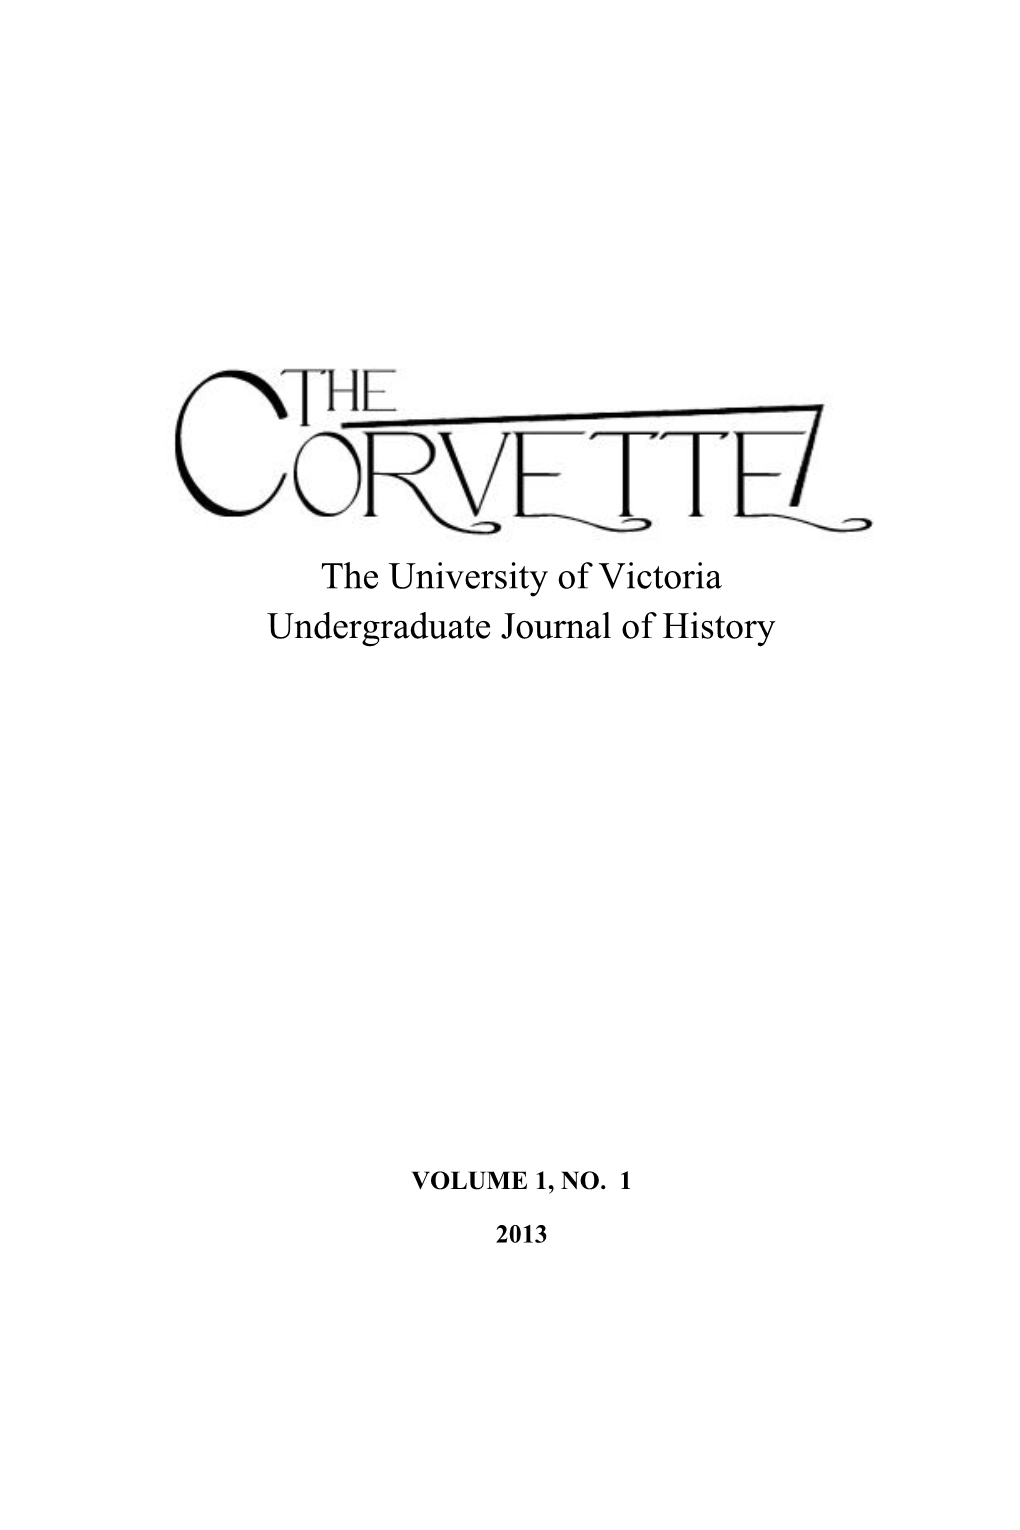 The University of Victoria Undergraduate Journal of History